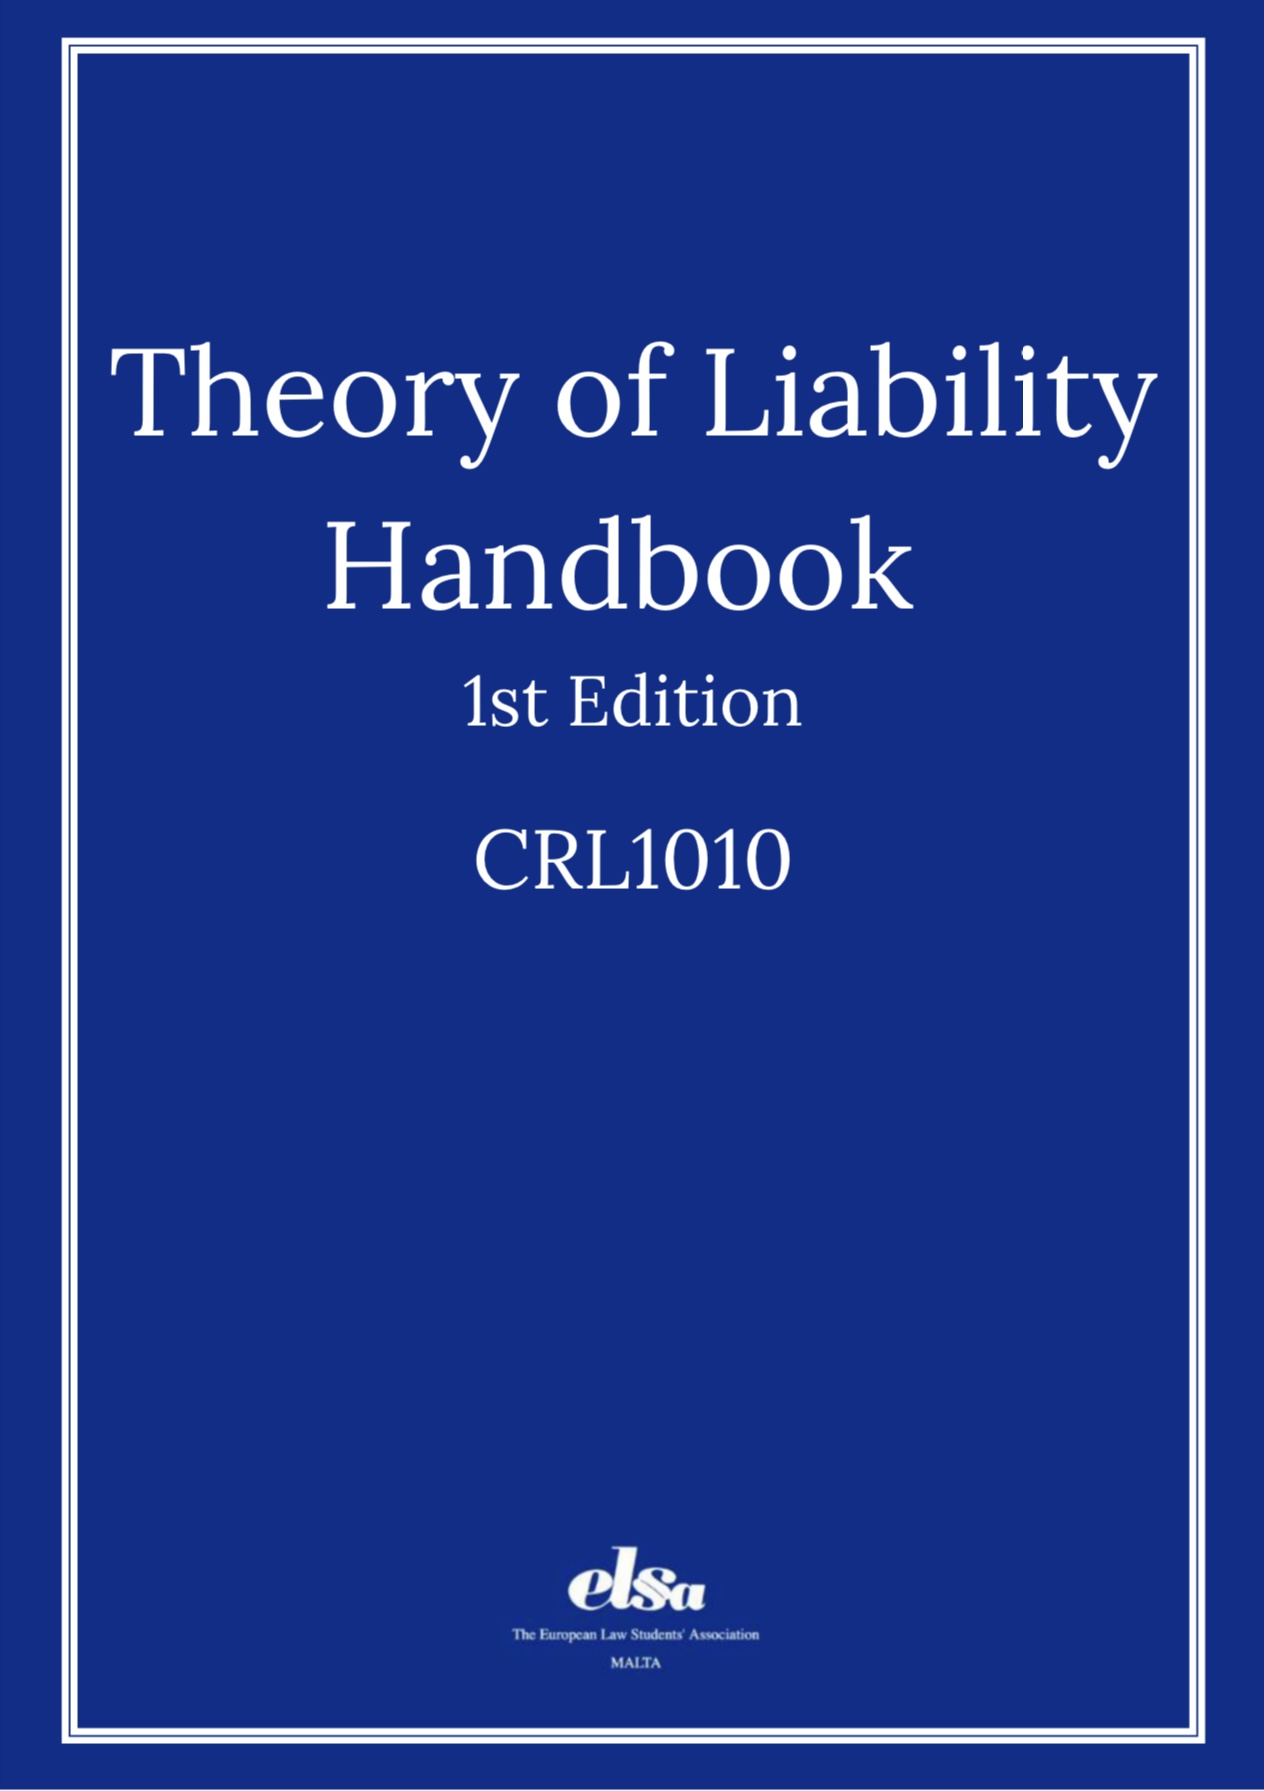 Theory of Criminal Liability Handbook